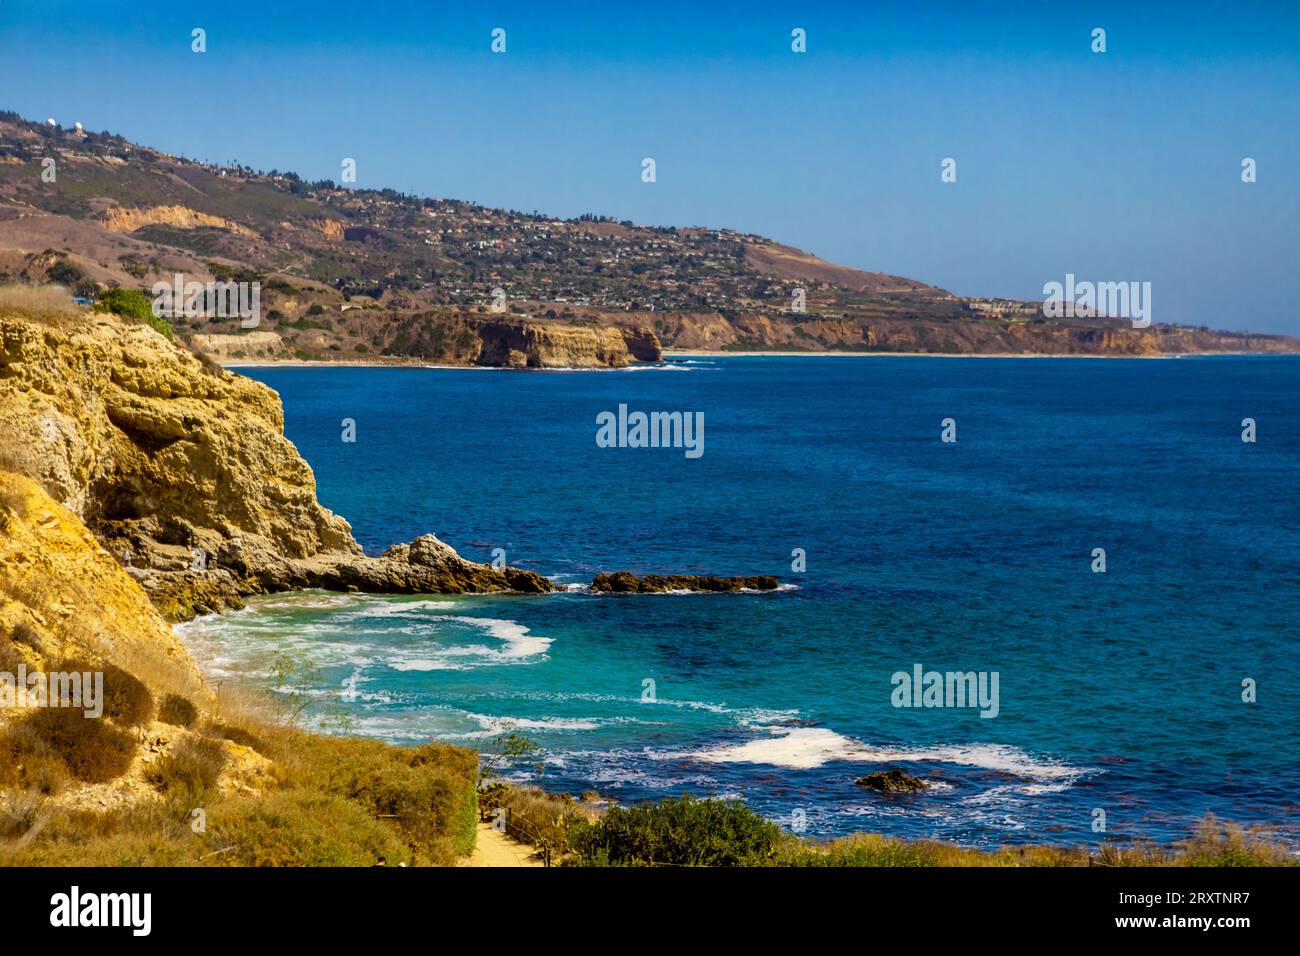 Palos Verdes cliffs and coastline, California, United States of America, North America Stock Photo